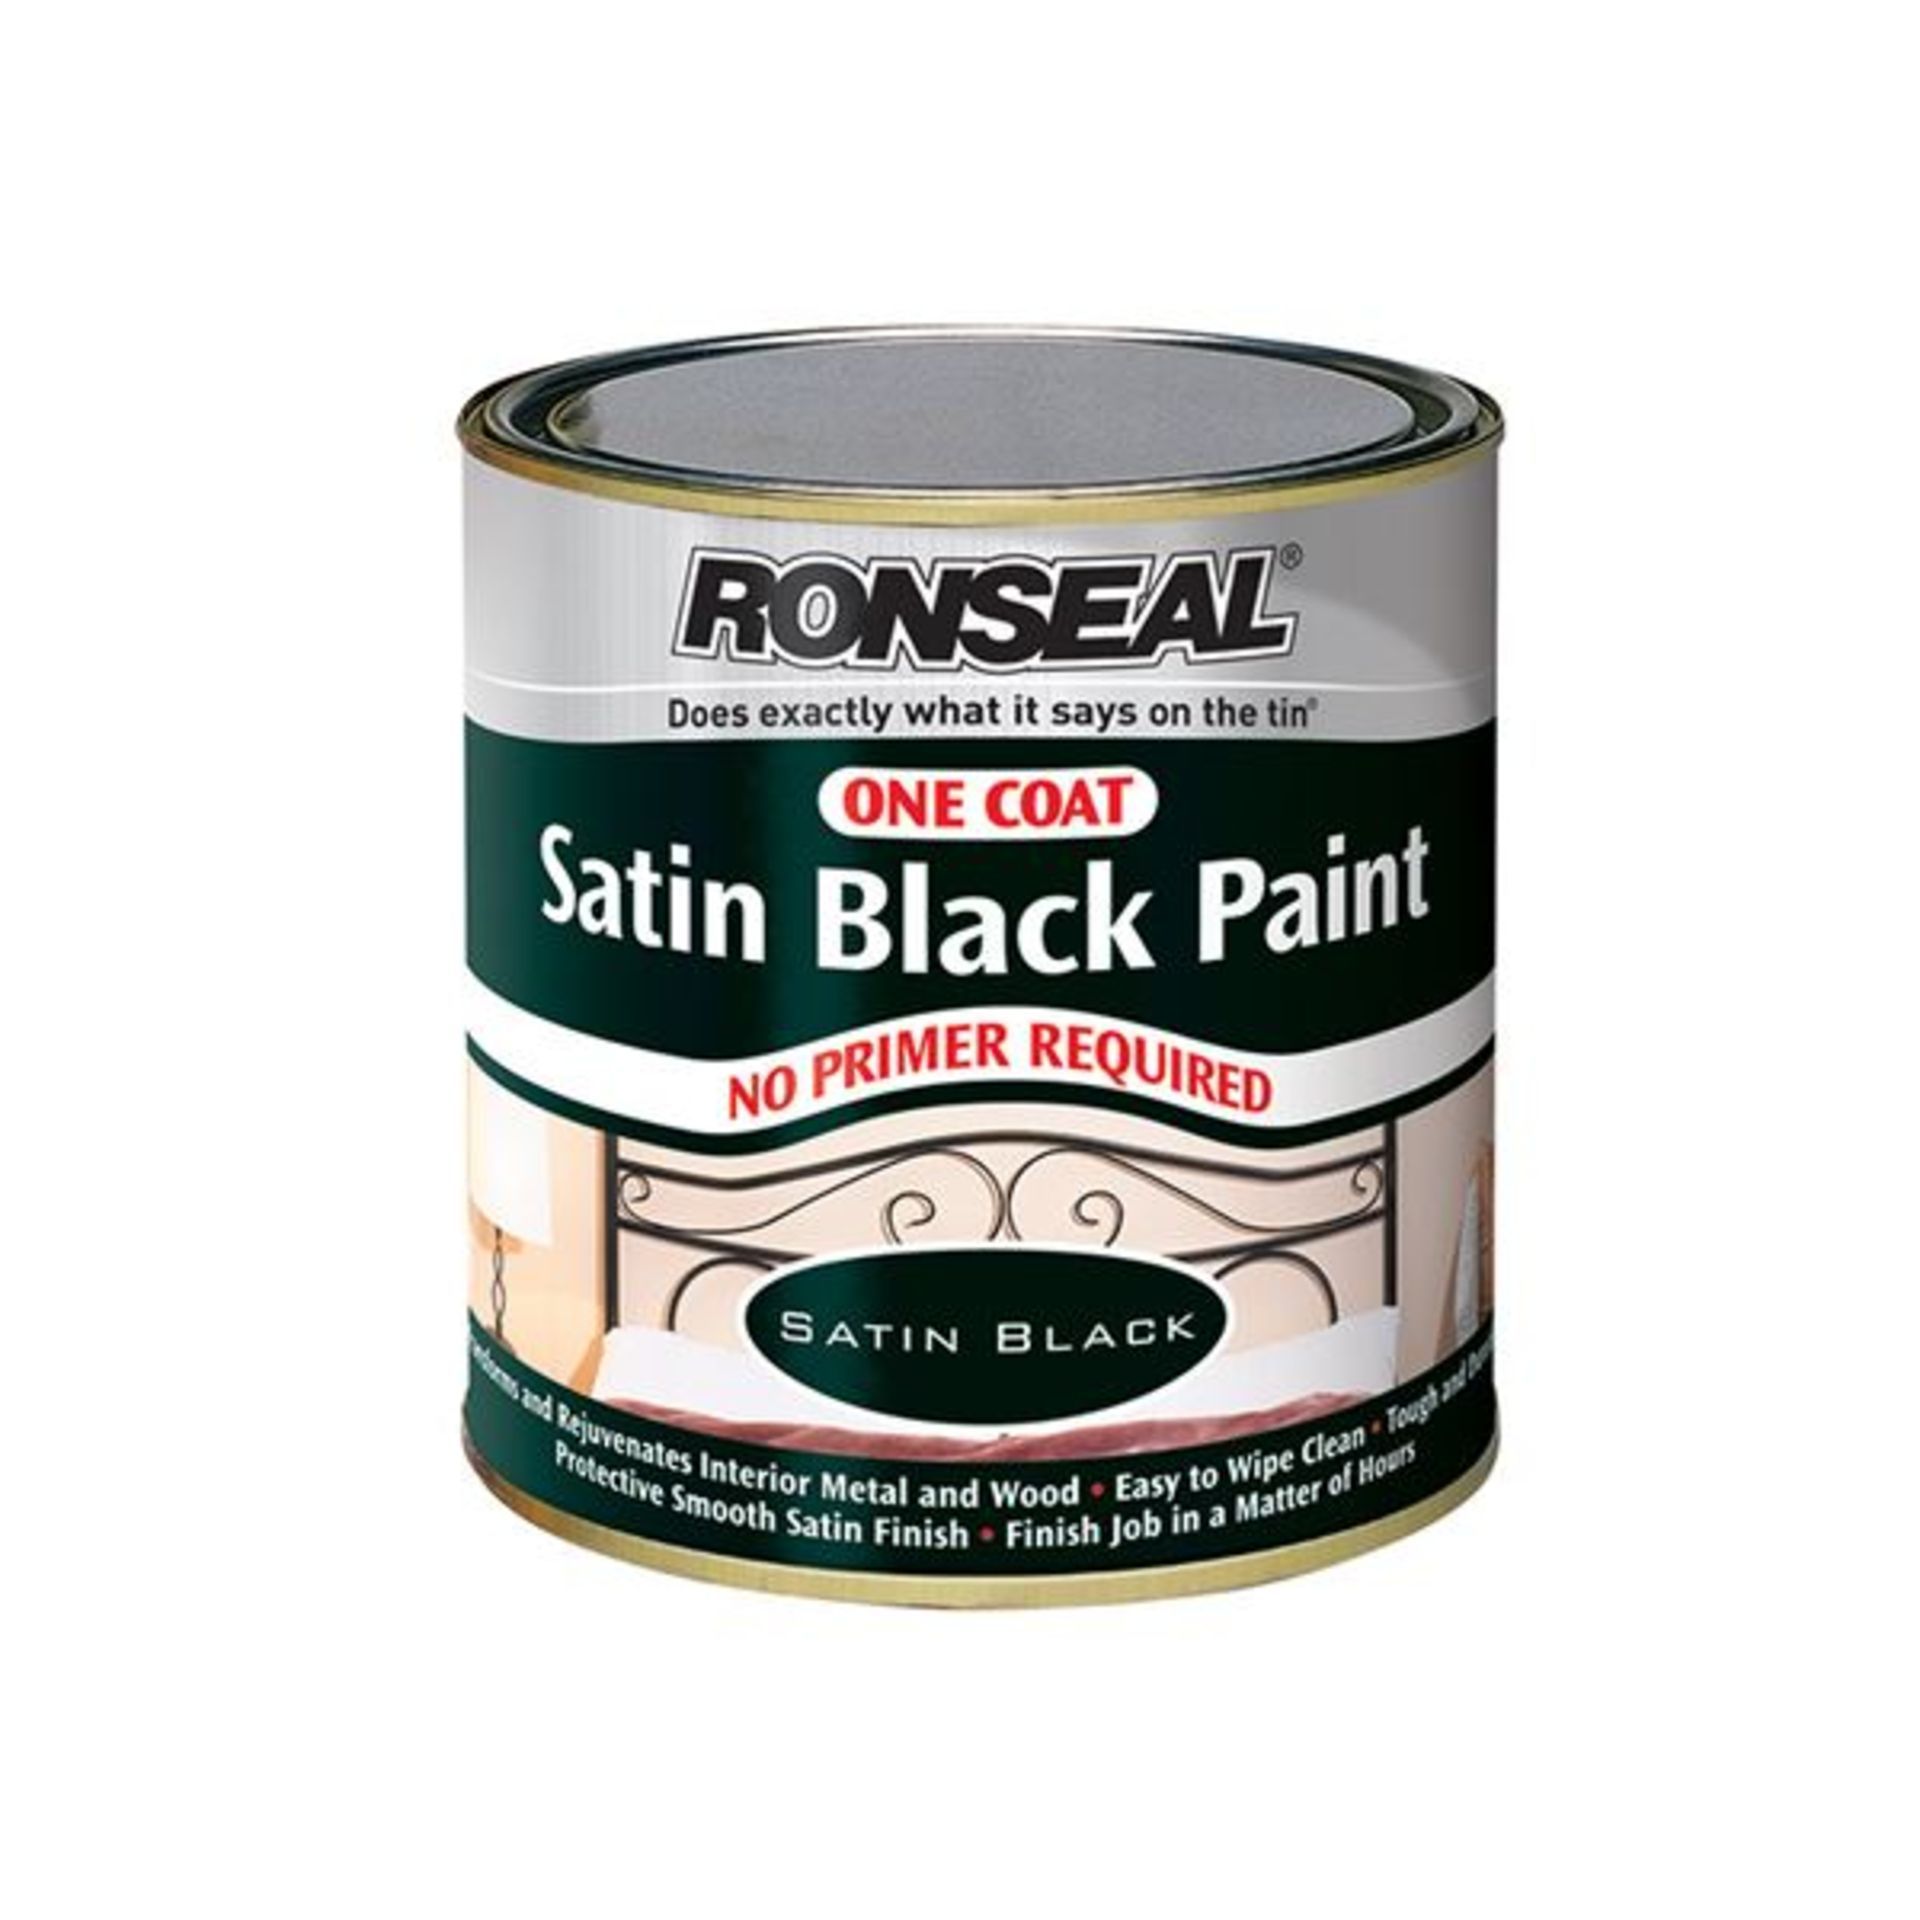 15 X BRAND NEW RONSEAL Oc Satin Black Paint 250ml RRP £20 EACH